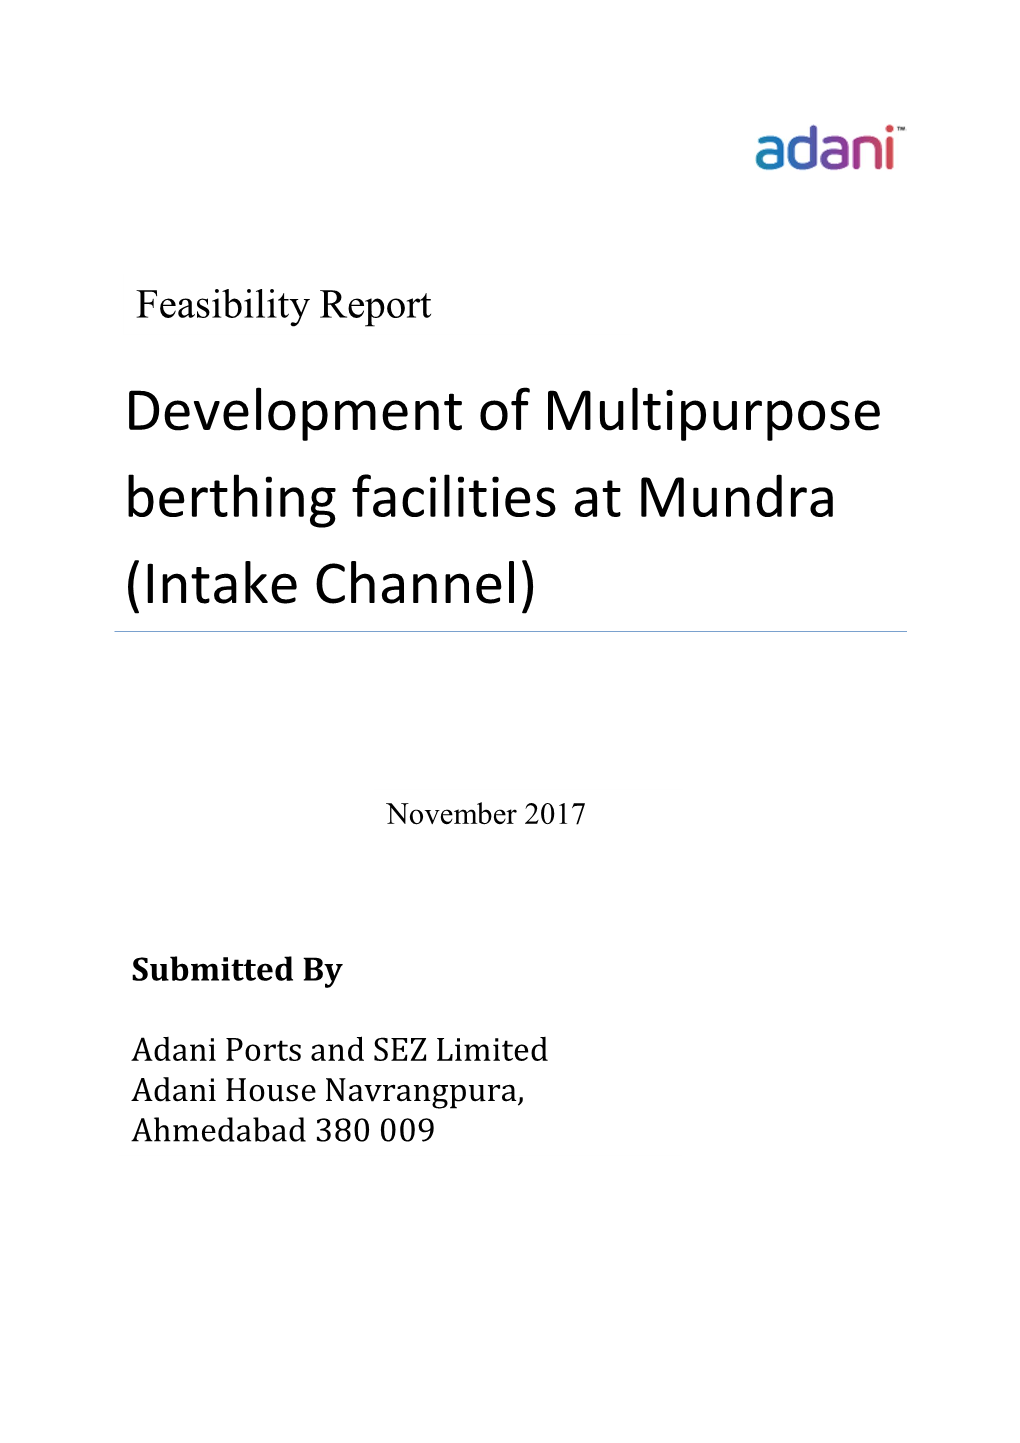 Development of Multipurpose Berthing Facilities at Mundra (Intake Channel)